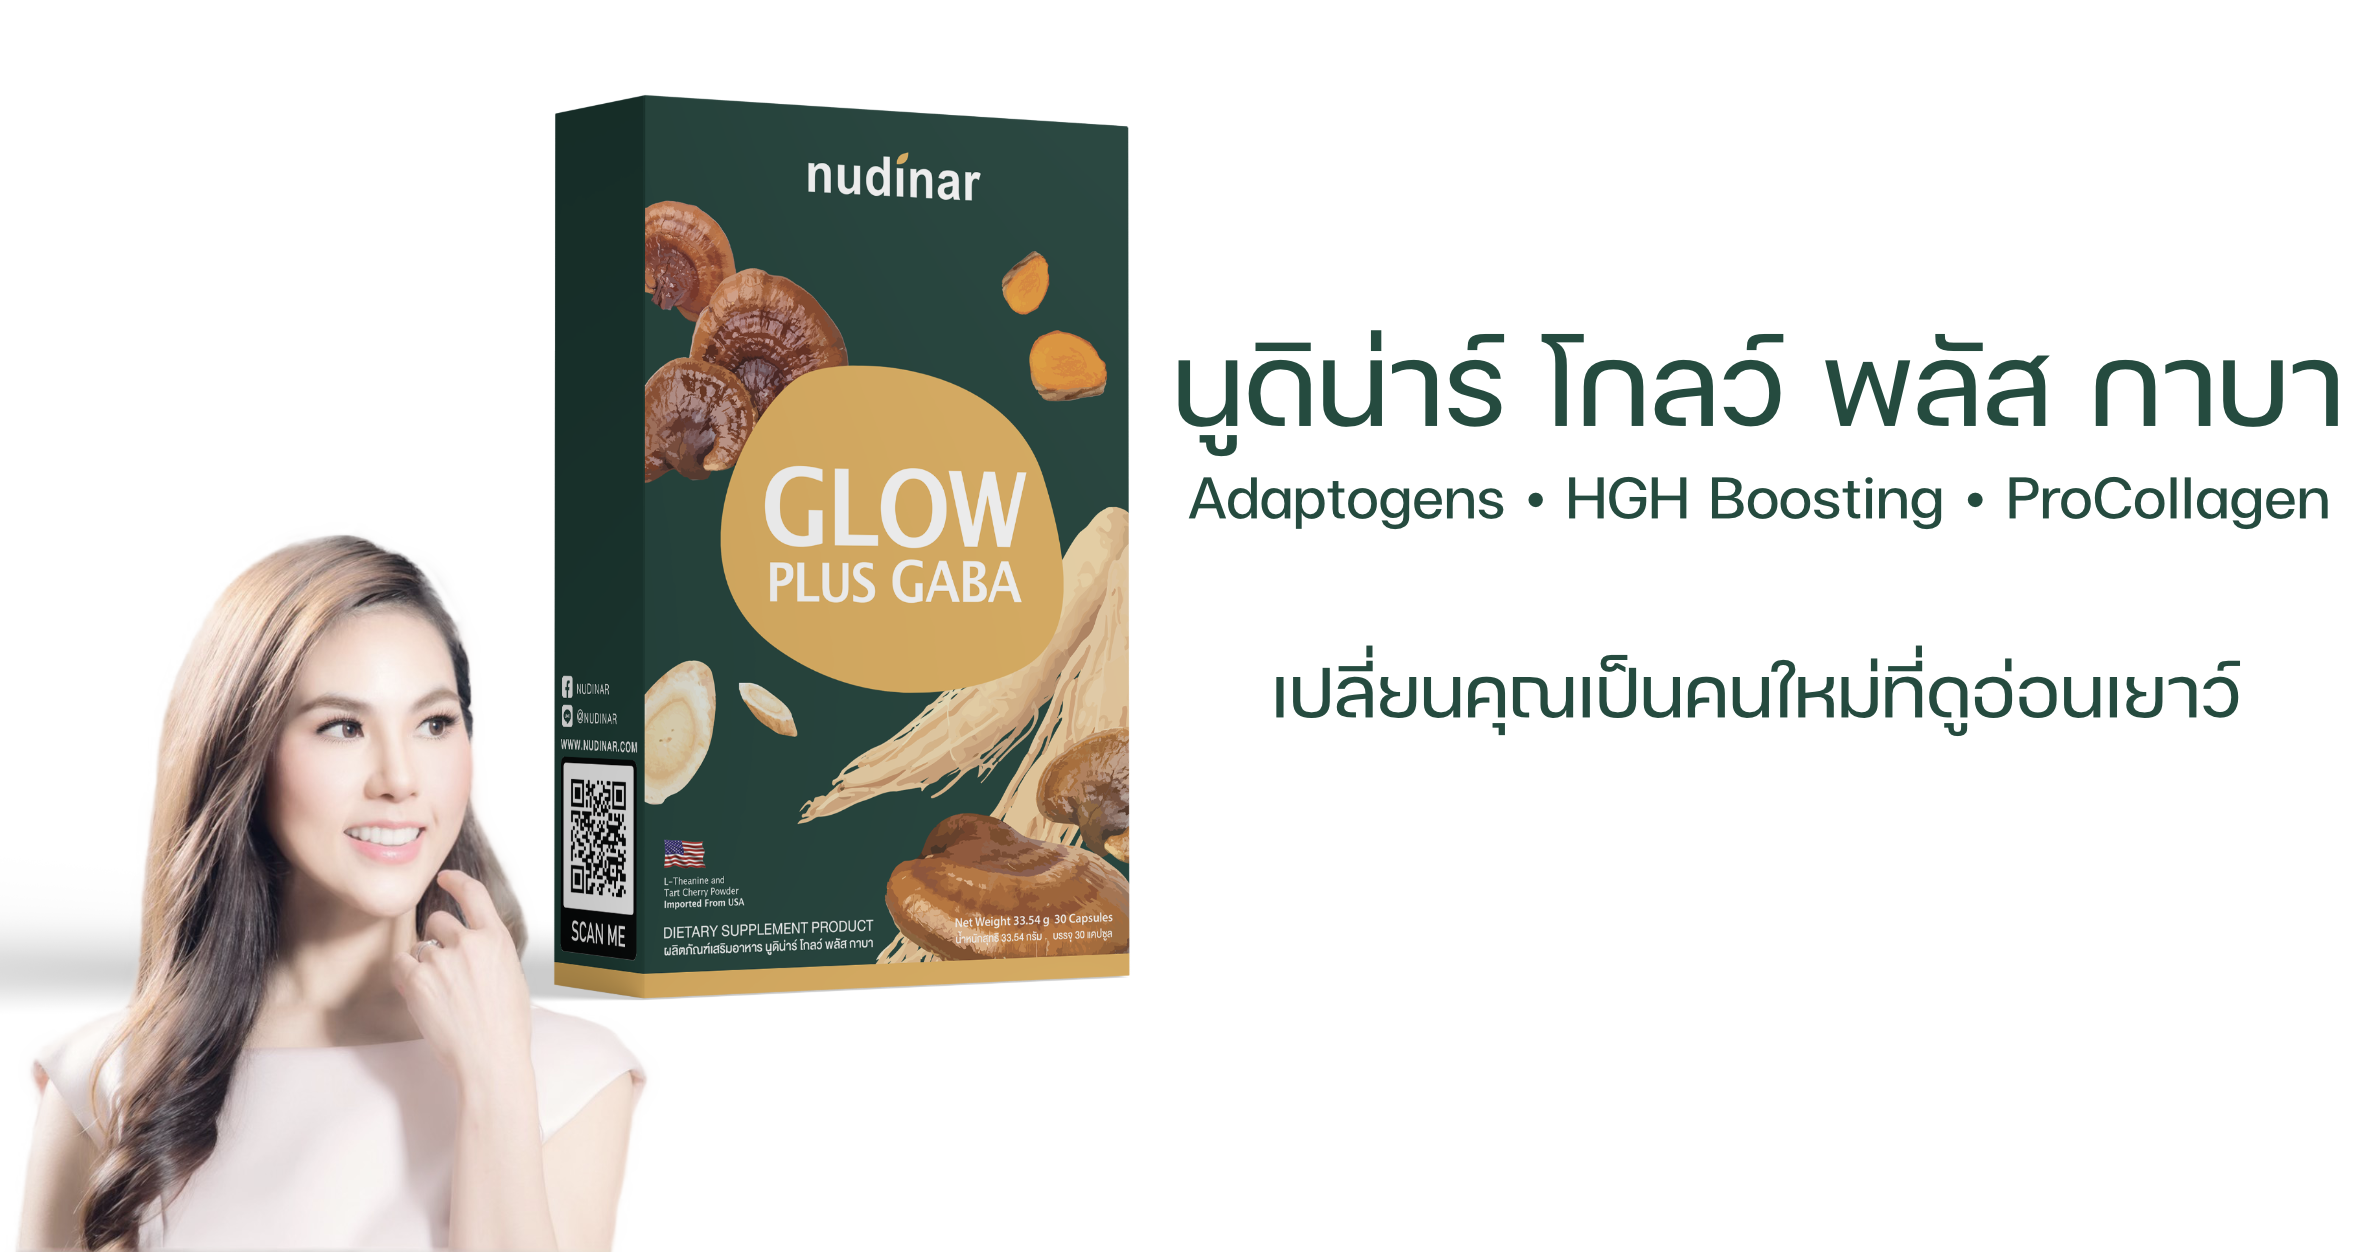 Nudinar Glow Plus GABA